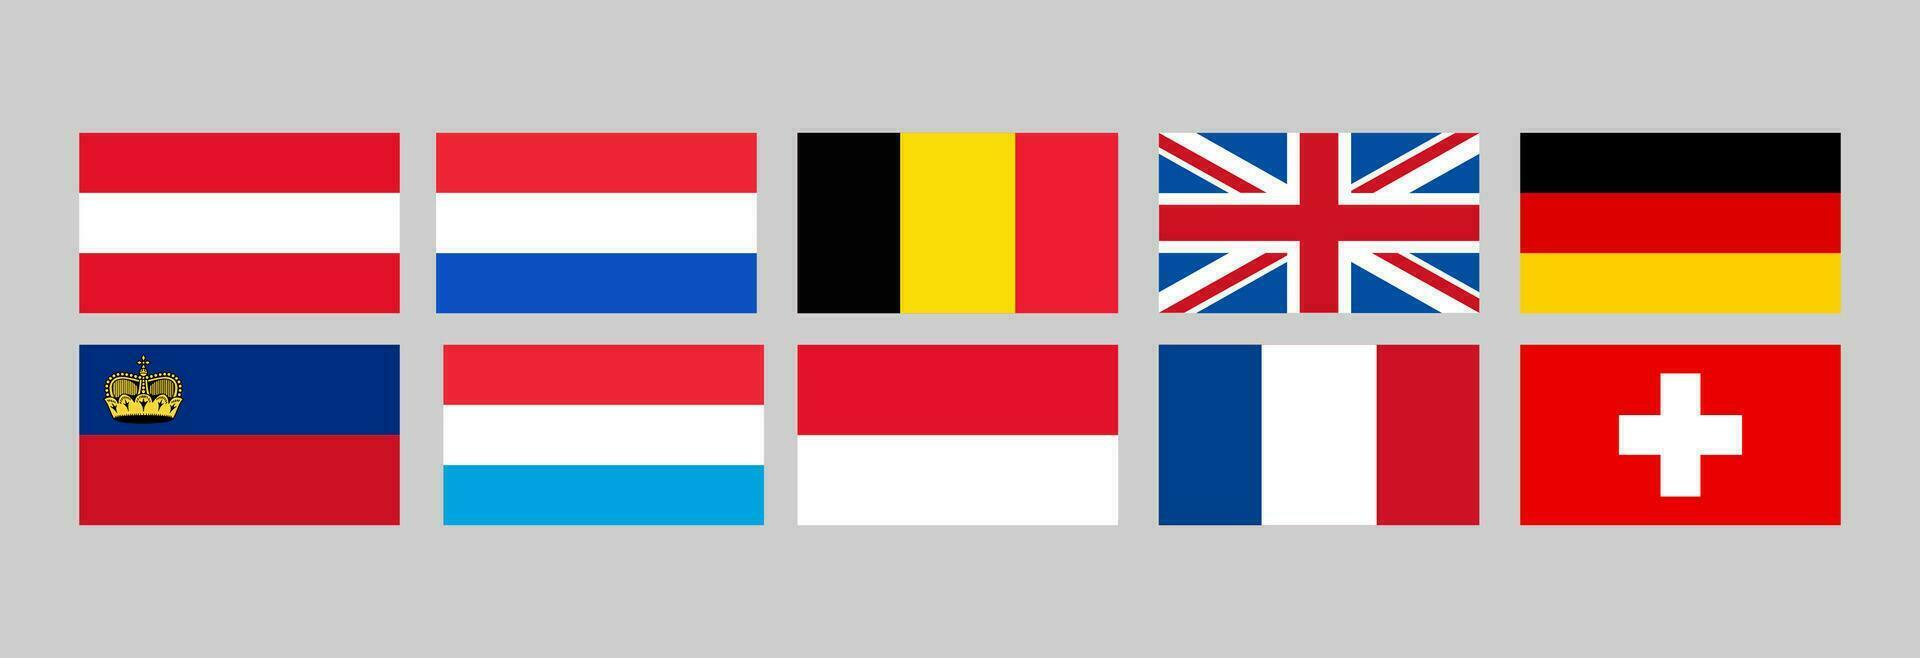 European country flags, Austria, Netherlands, Belgium, United Kingdom, Germany, Liechtenstein, Luxembourg, Monaco, France, Switzerland vector